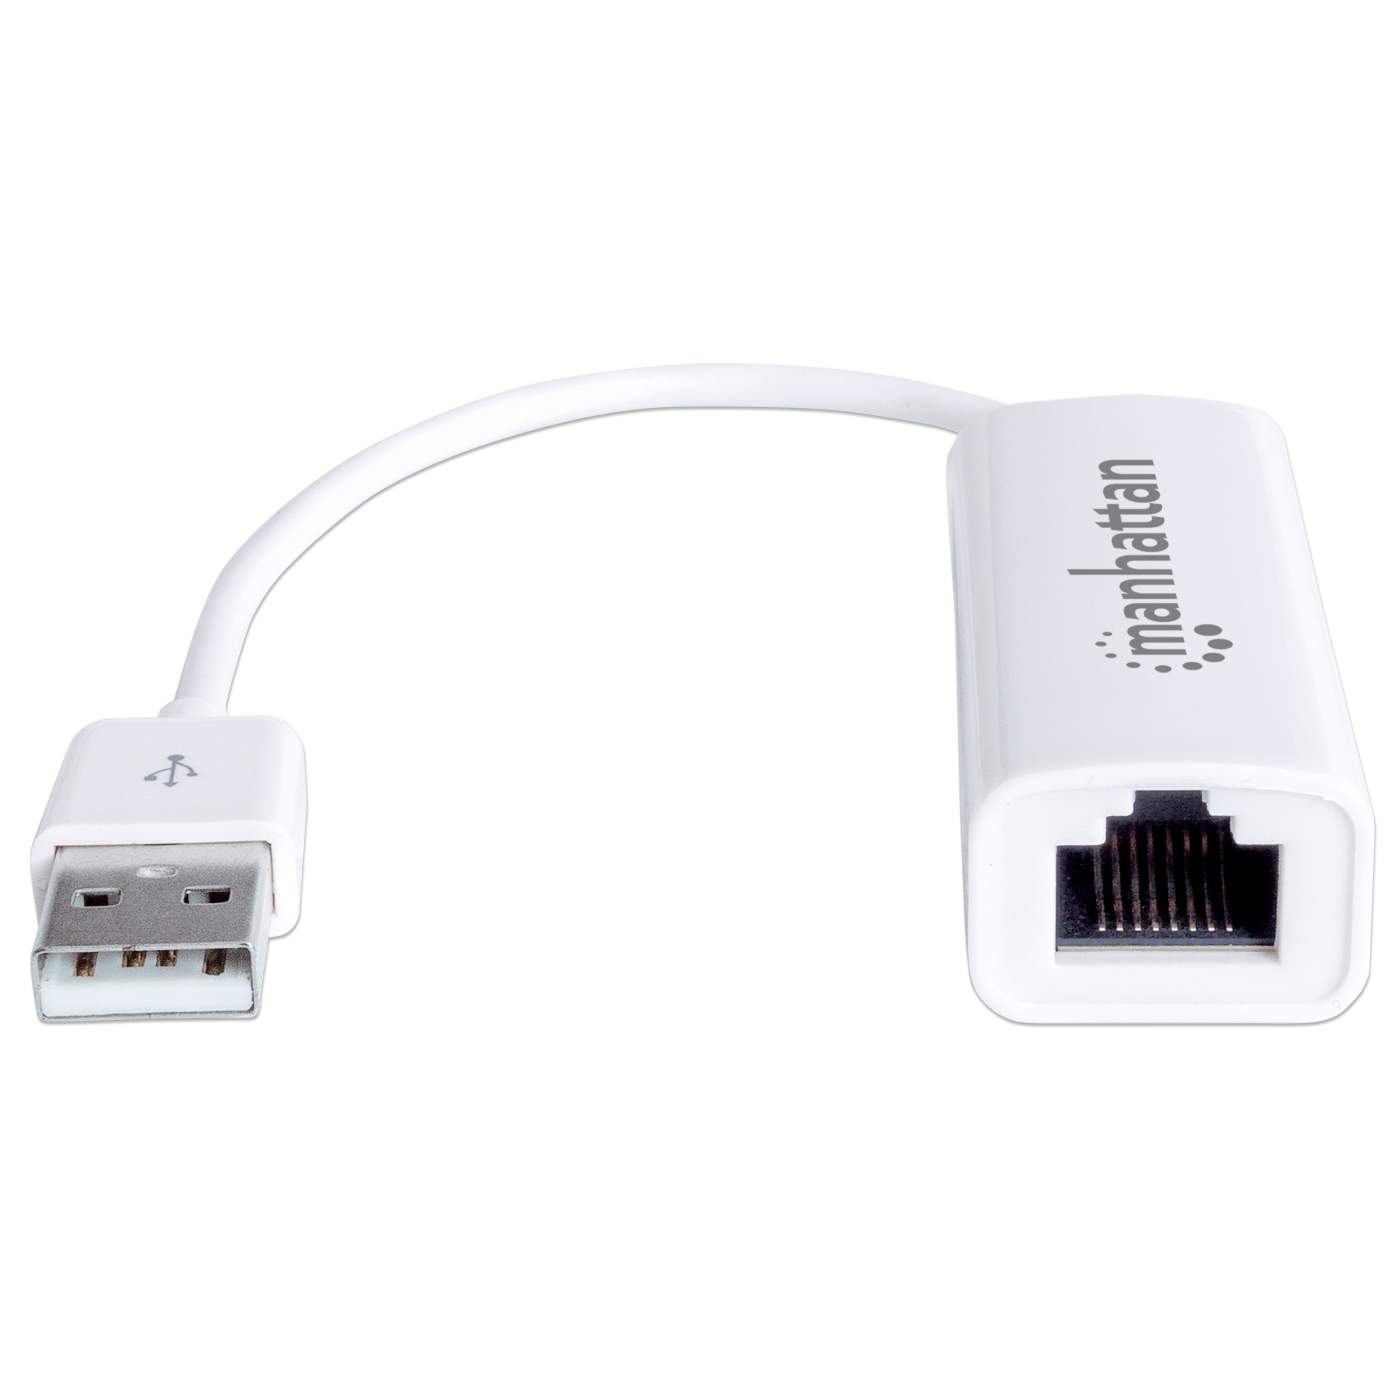 USB 2.0 Fast Ethernet Adapter Image 4